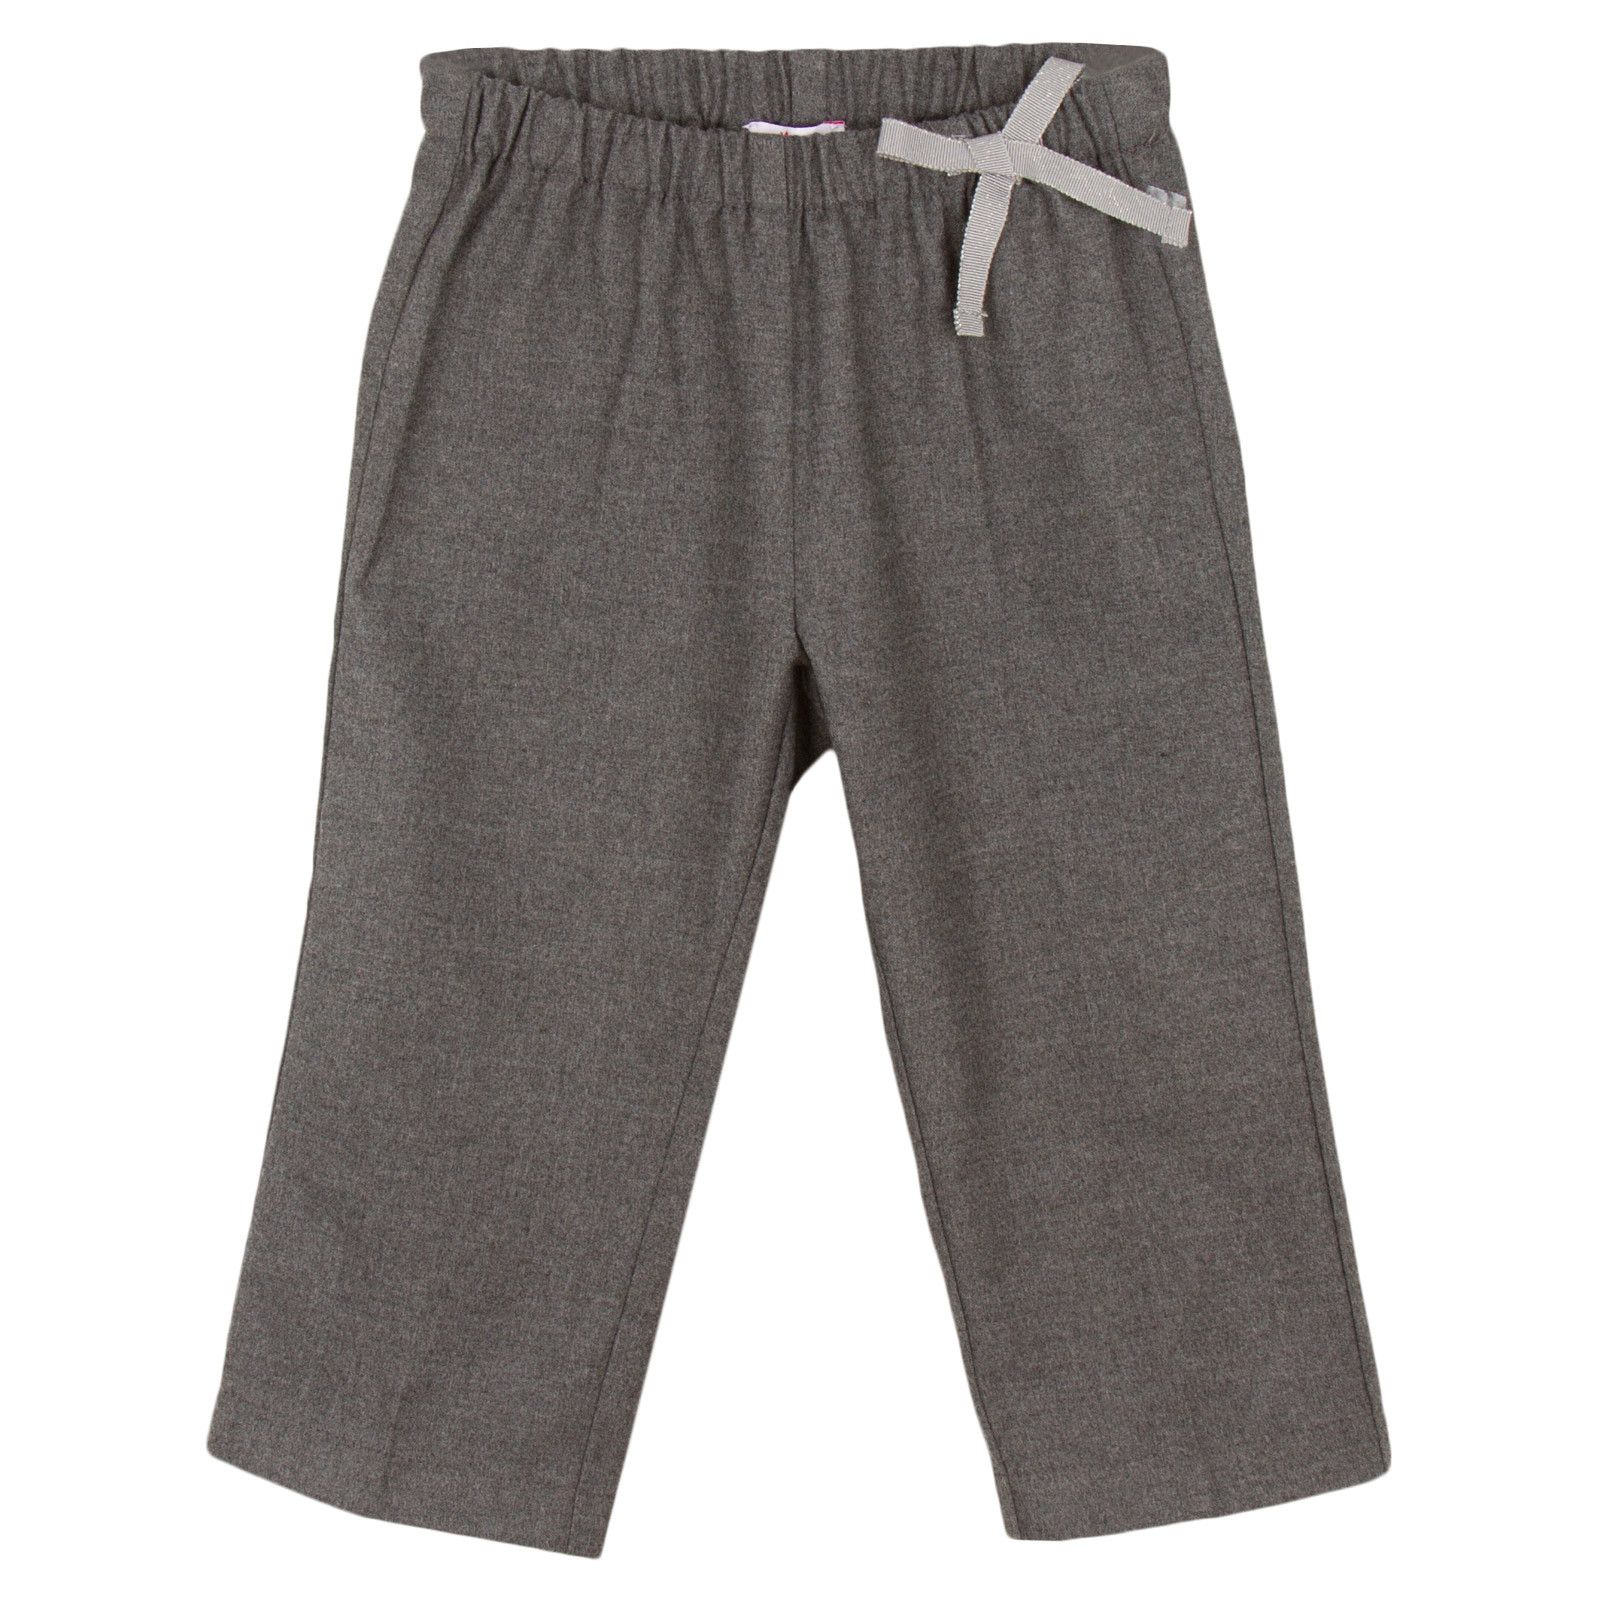 Girls Grey Capri Pants With a Silver Sparkle Bow - CÉMAROSE | Children's Fashion Store - 1